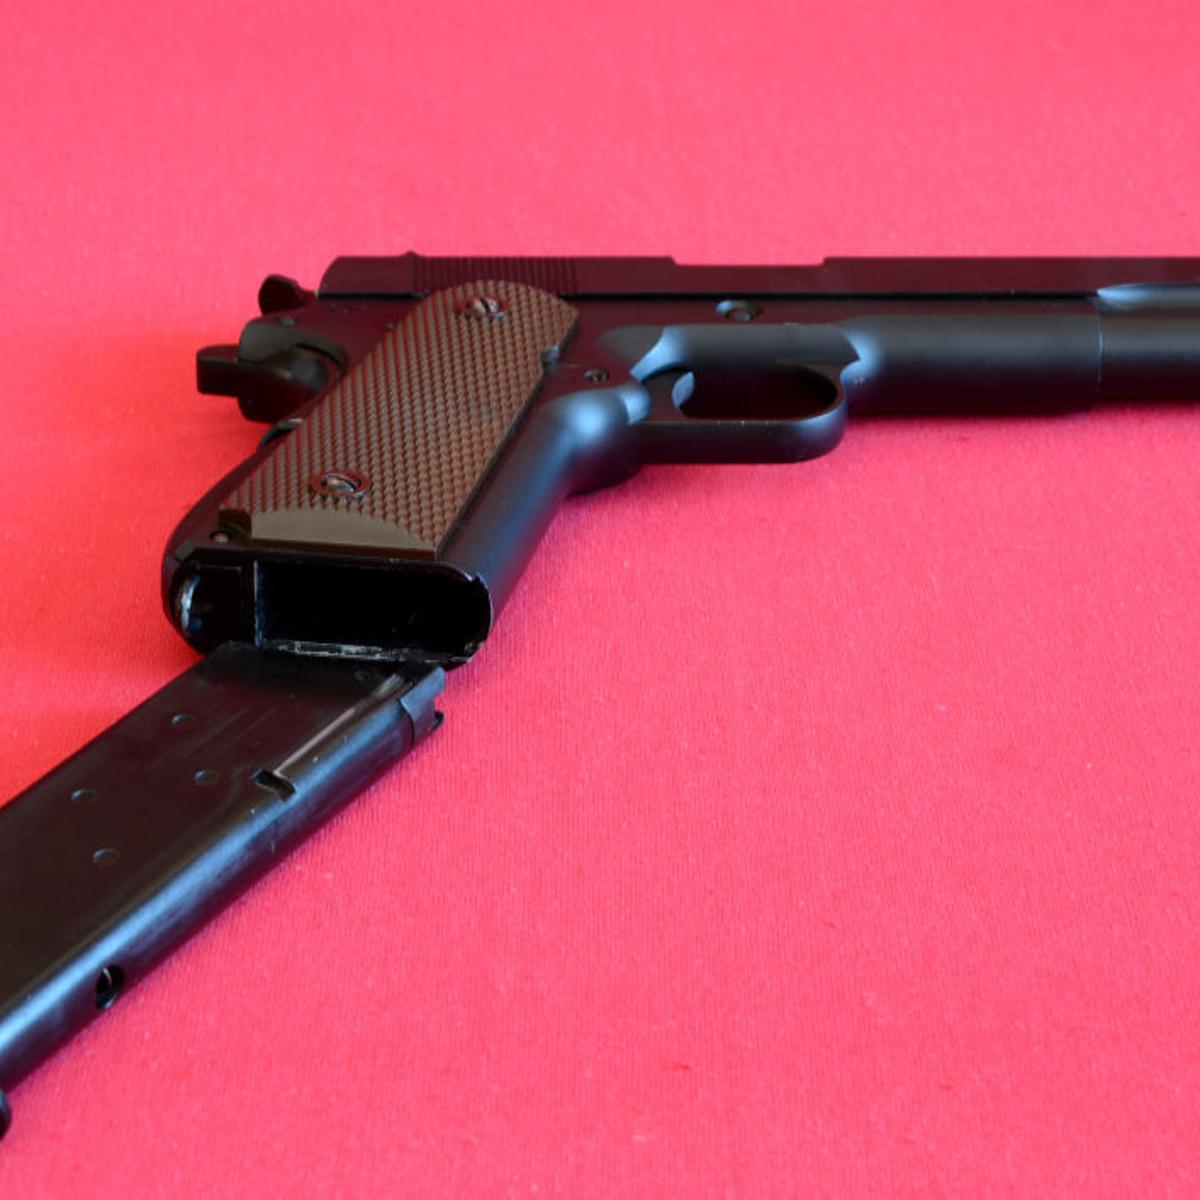 Airsoft Rifles And Bb Guns Pose Threat Winston Salem Police Warn